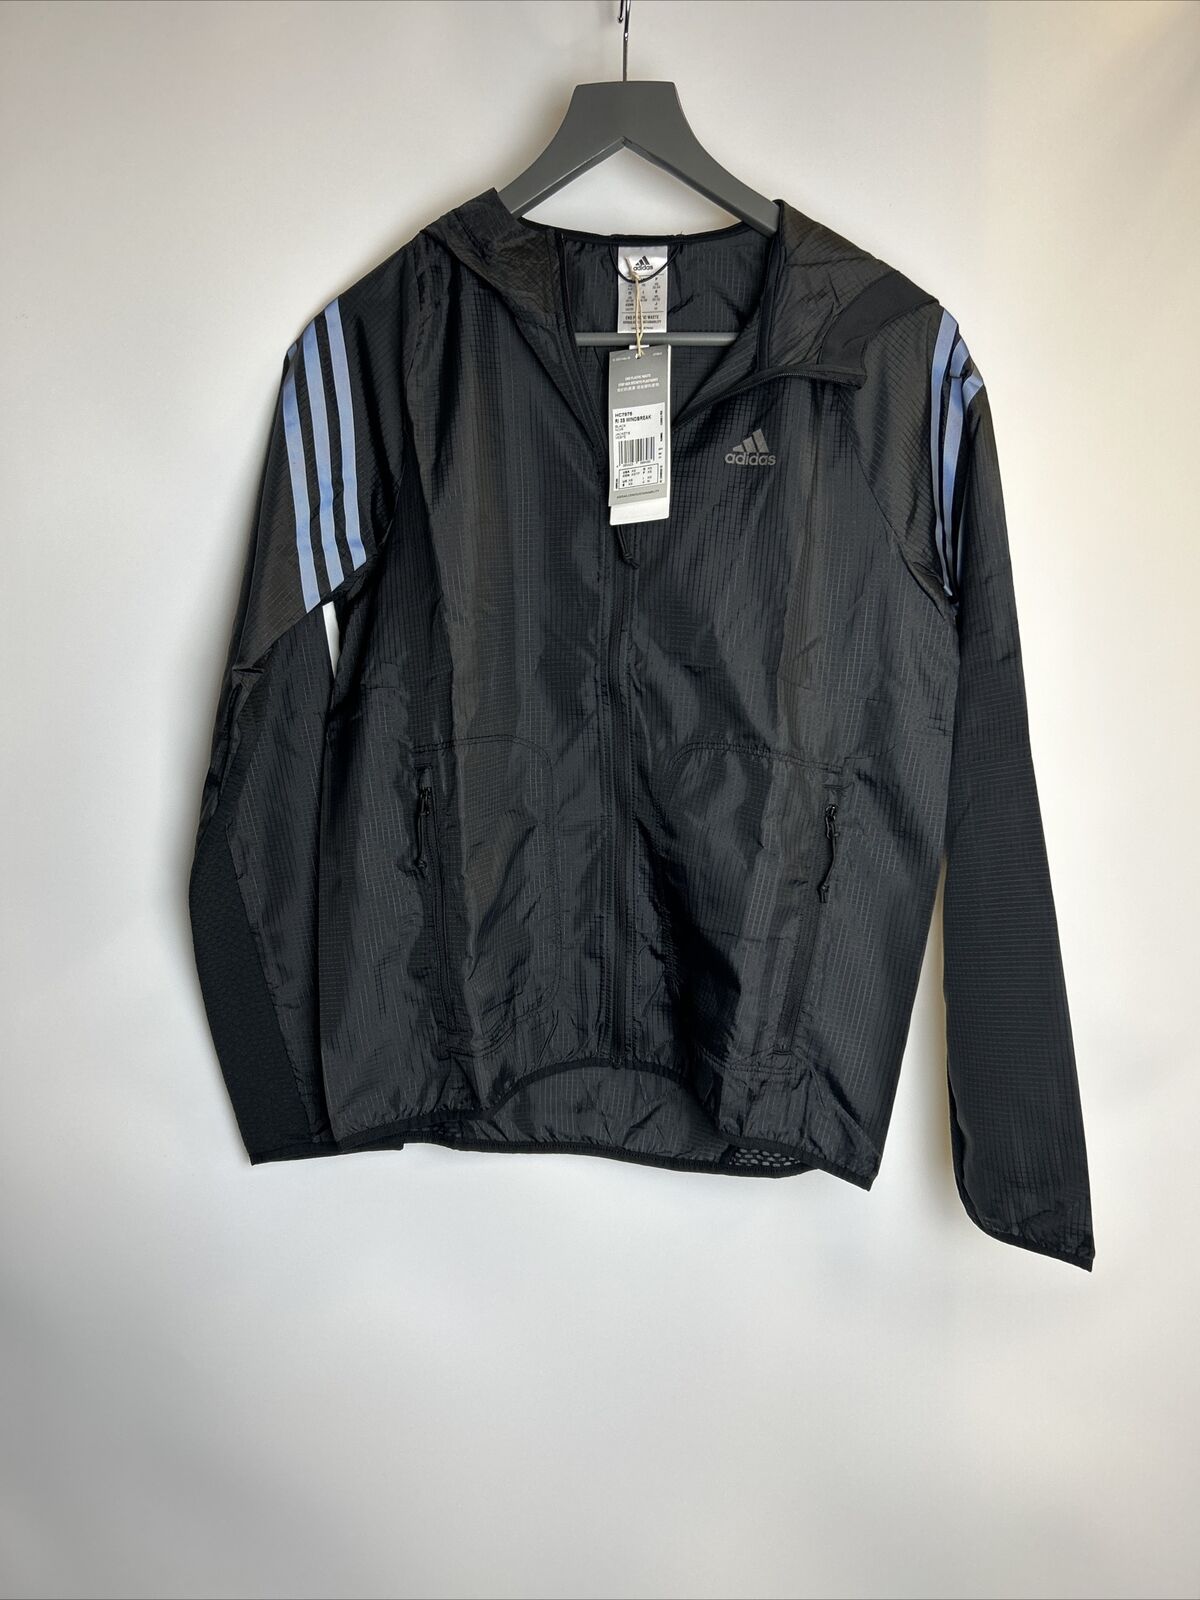 Adidas 3 Stripes Running Jacket HC7976 - Black. UK XS **** Ref V62